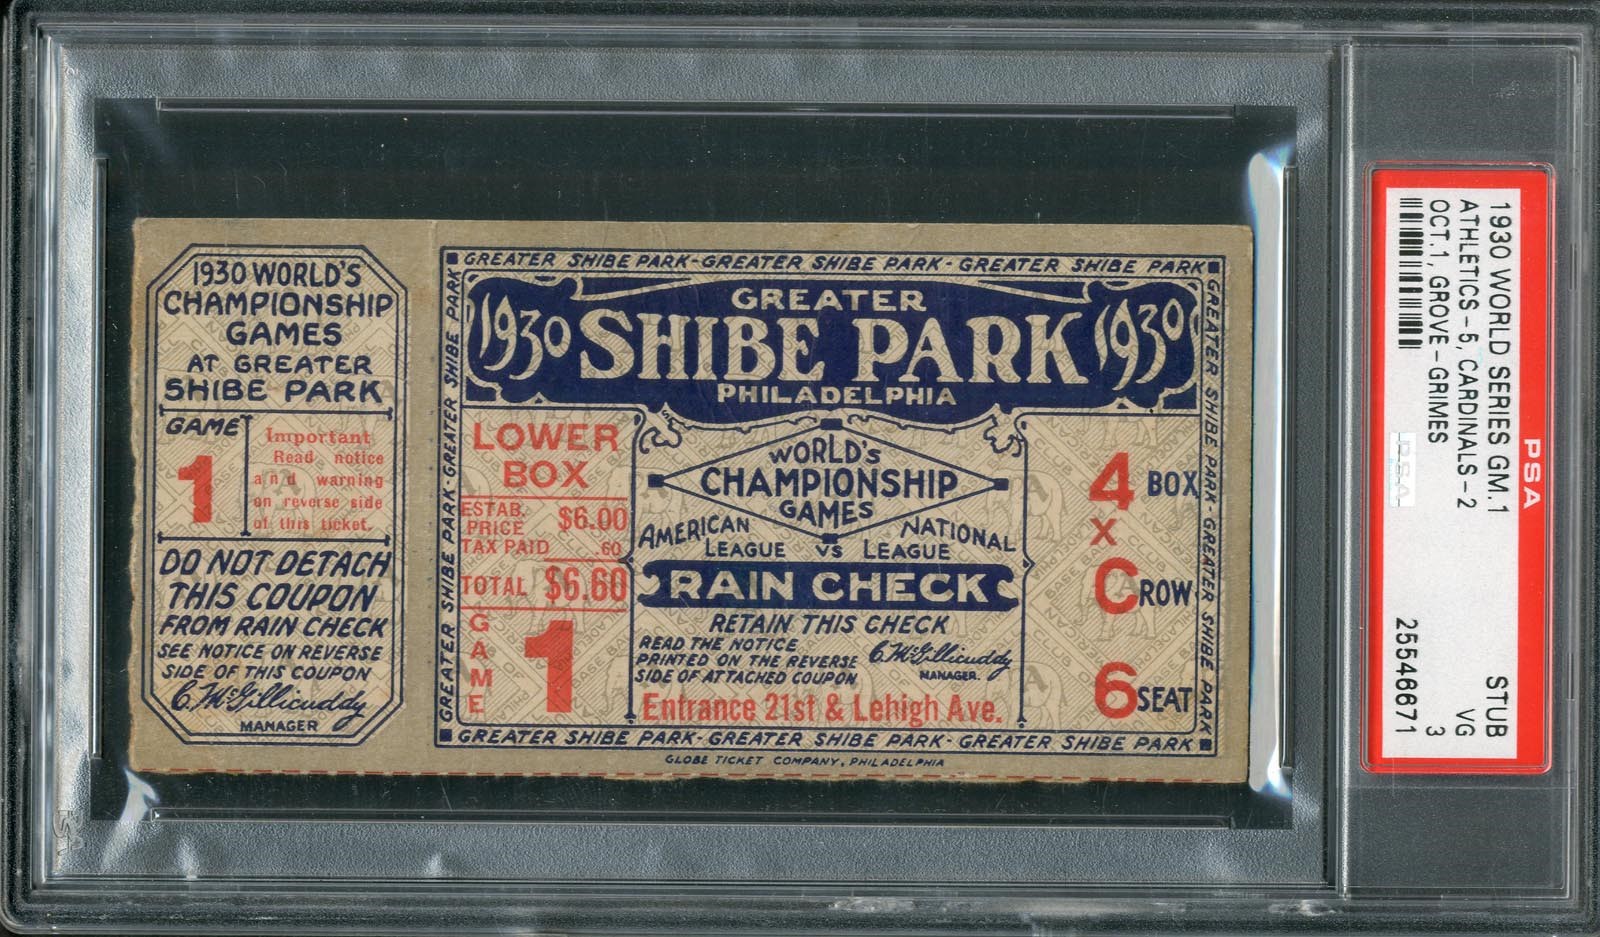 Baseball Memorabilia - 1930 World Series Game 1 Ticket and Souvenir Program